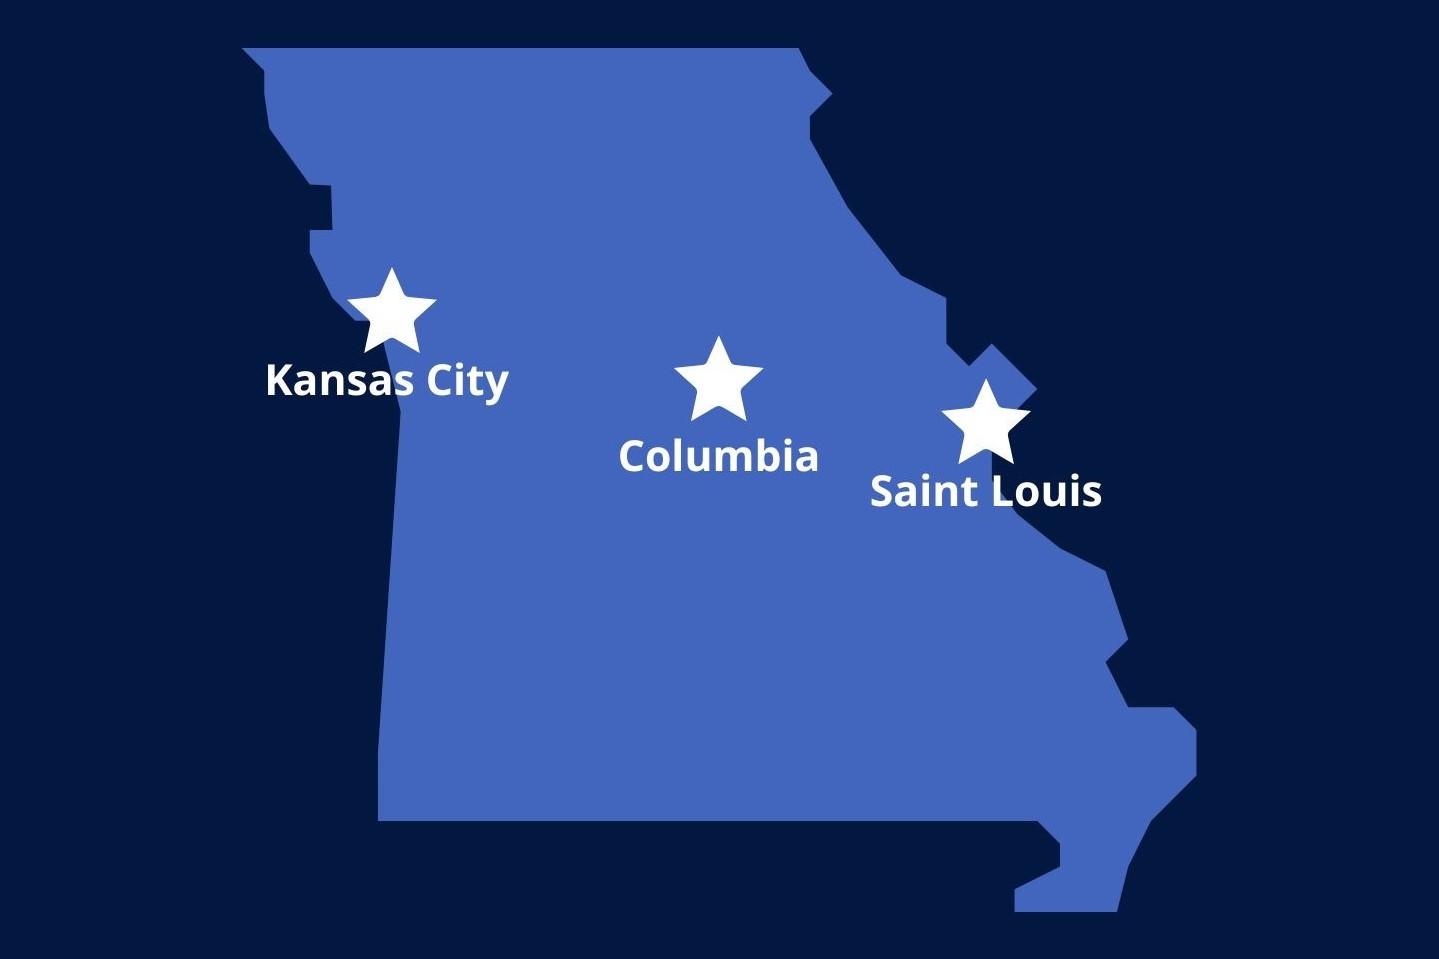 Image: Map of Missouri highlighting Kansas City, Columbia, and Saint Louis